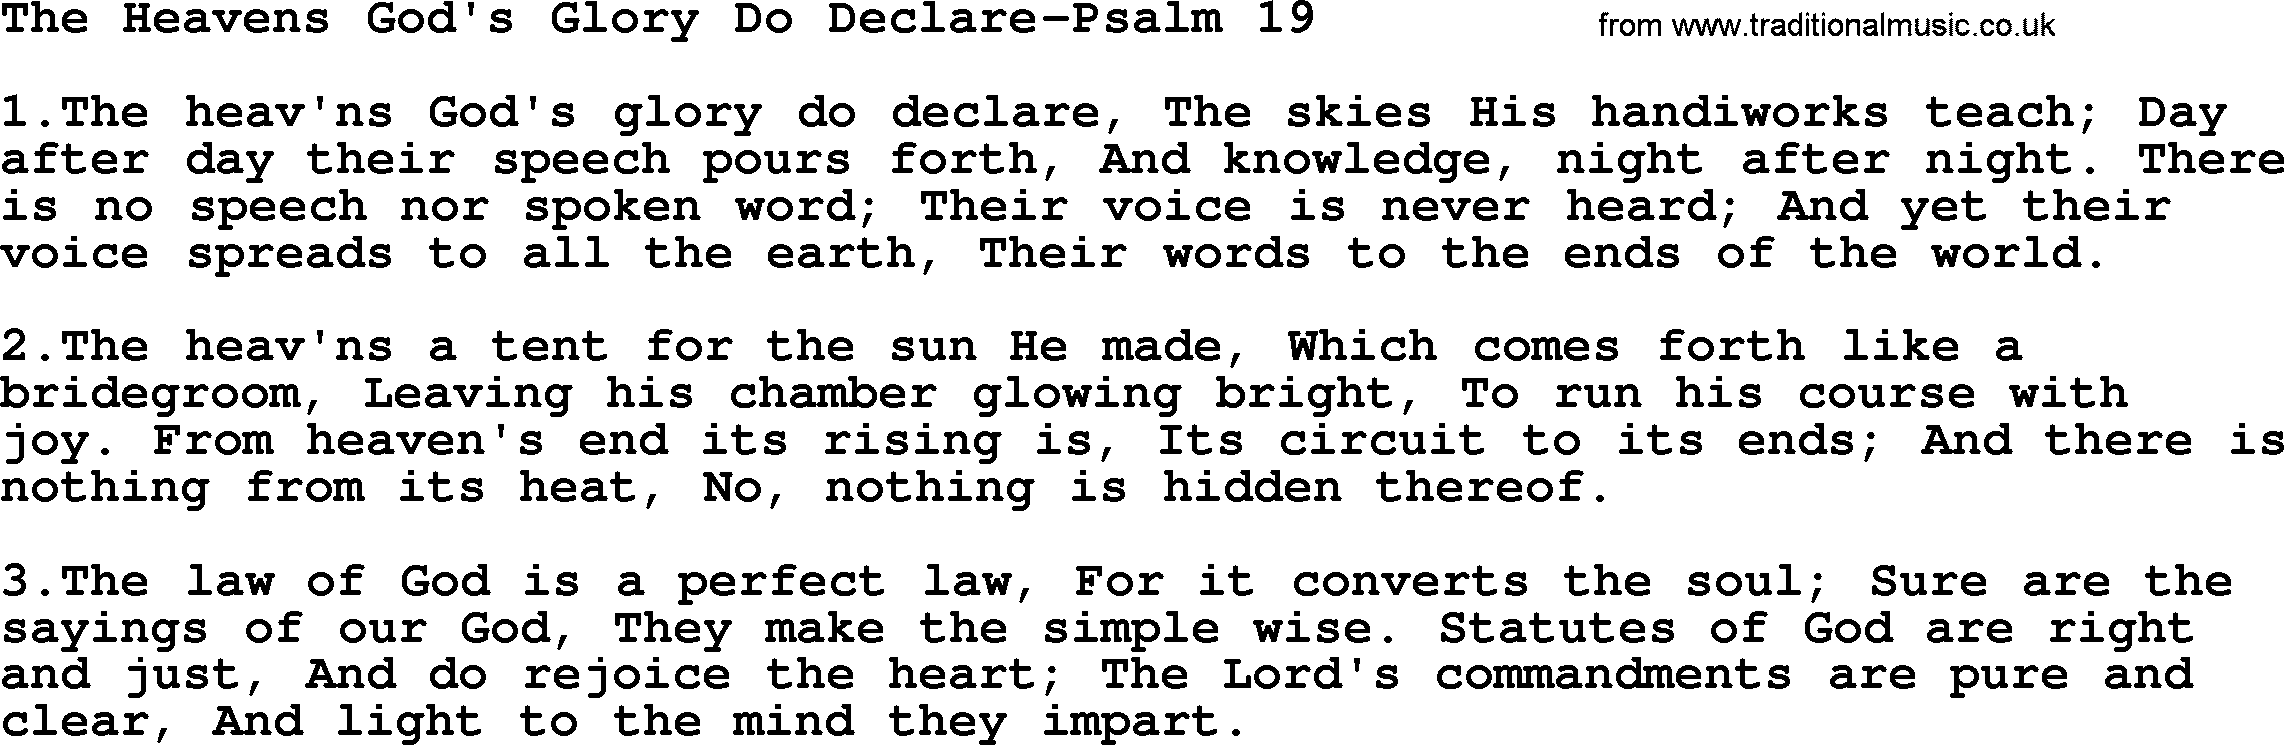 Hymns from the Psalms, Hymn: The Heavens God's Glory Do Declare-Psalm 19, lyrics with PDF